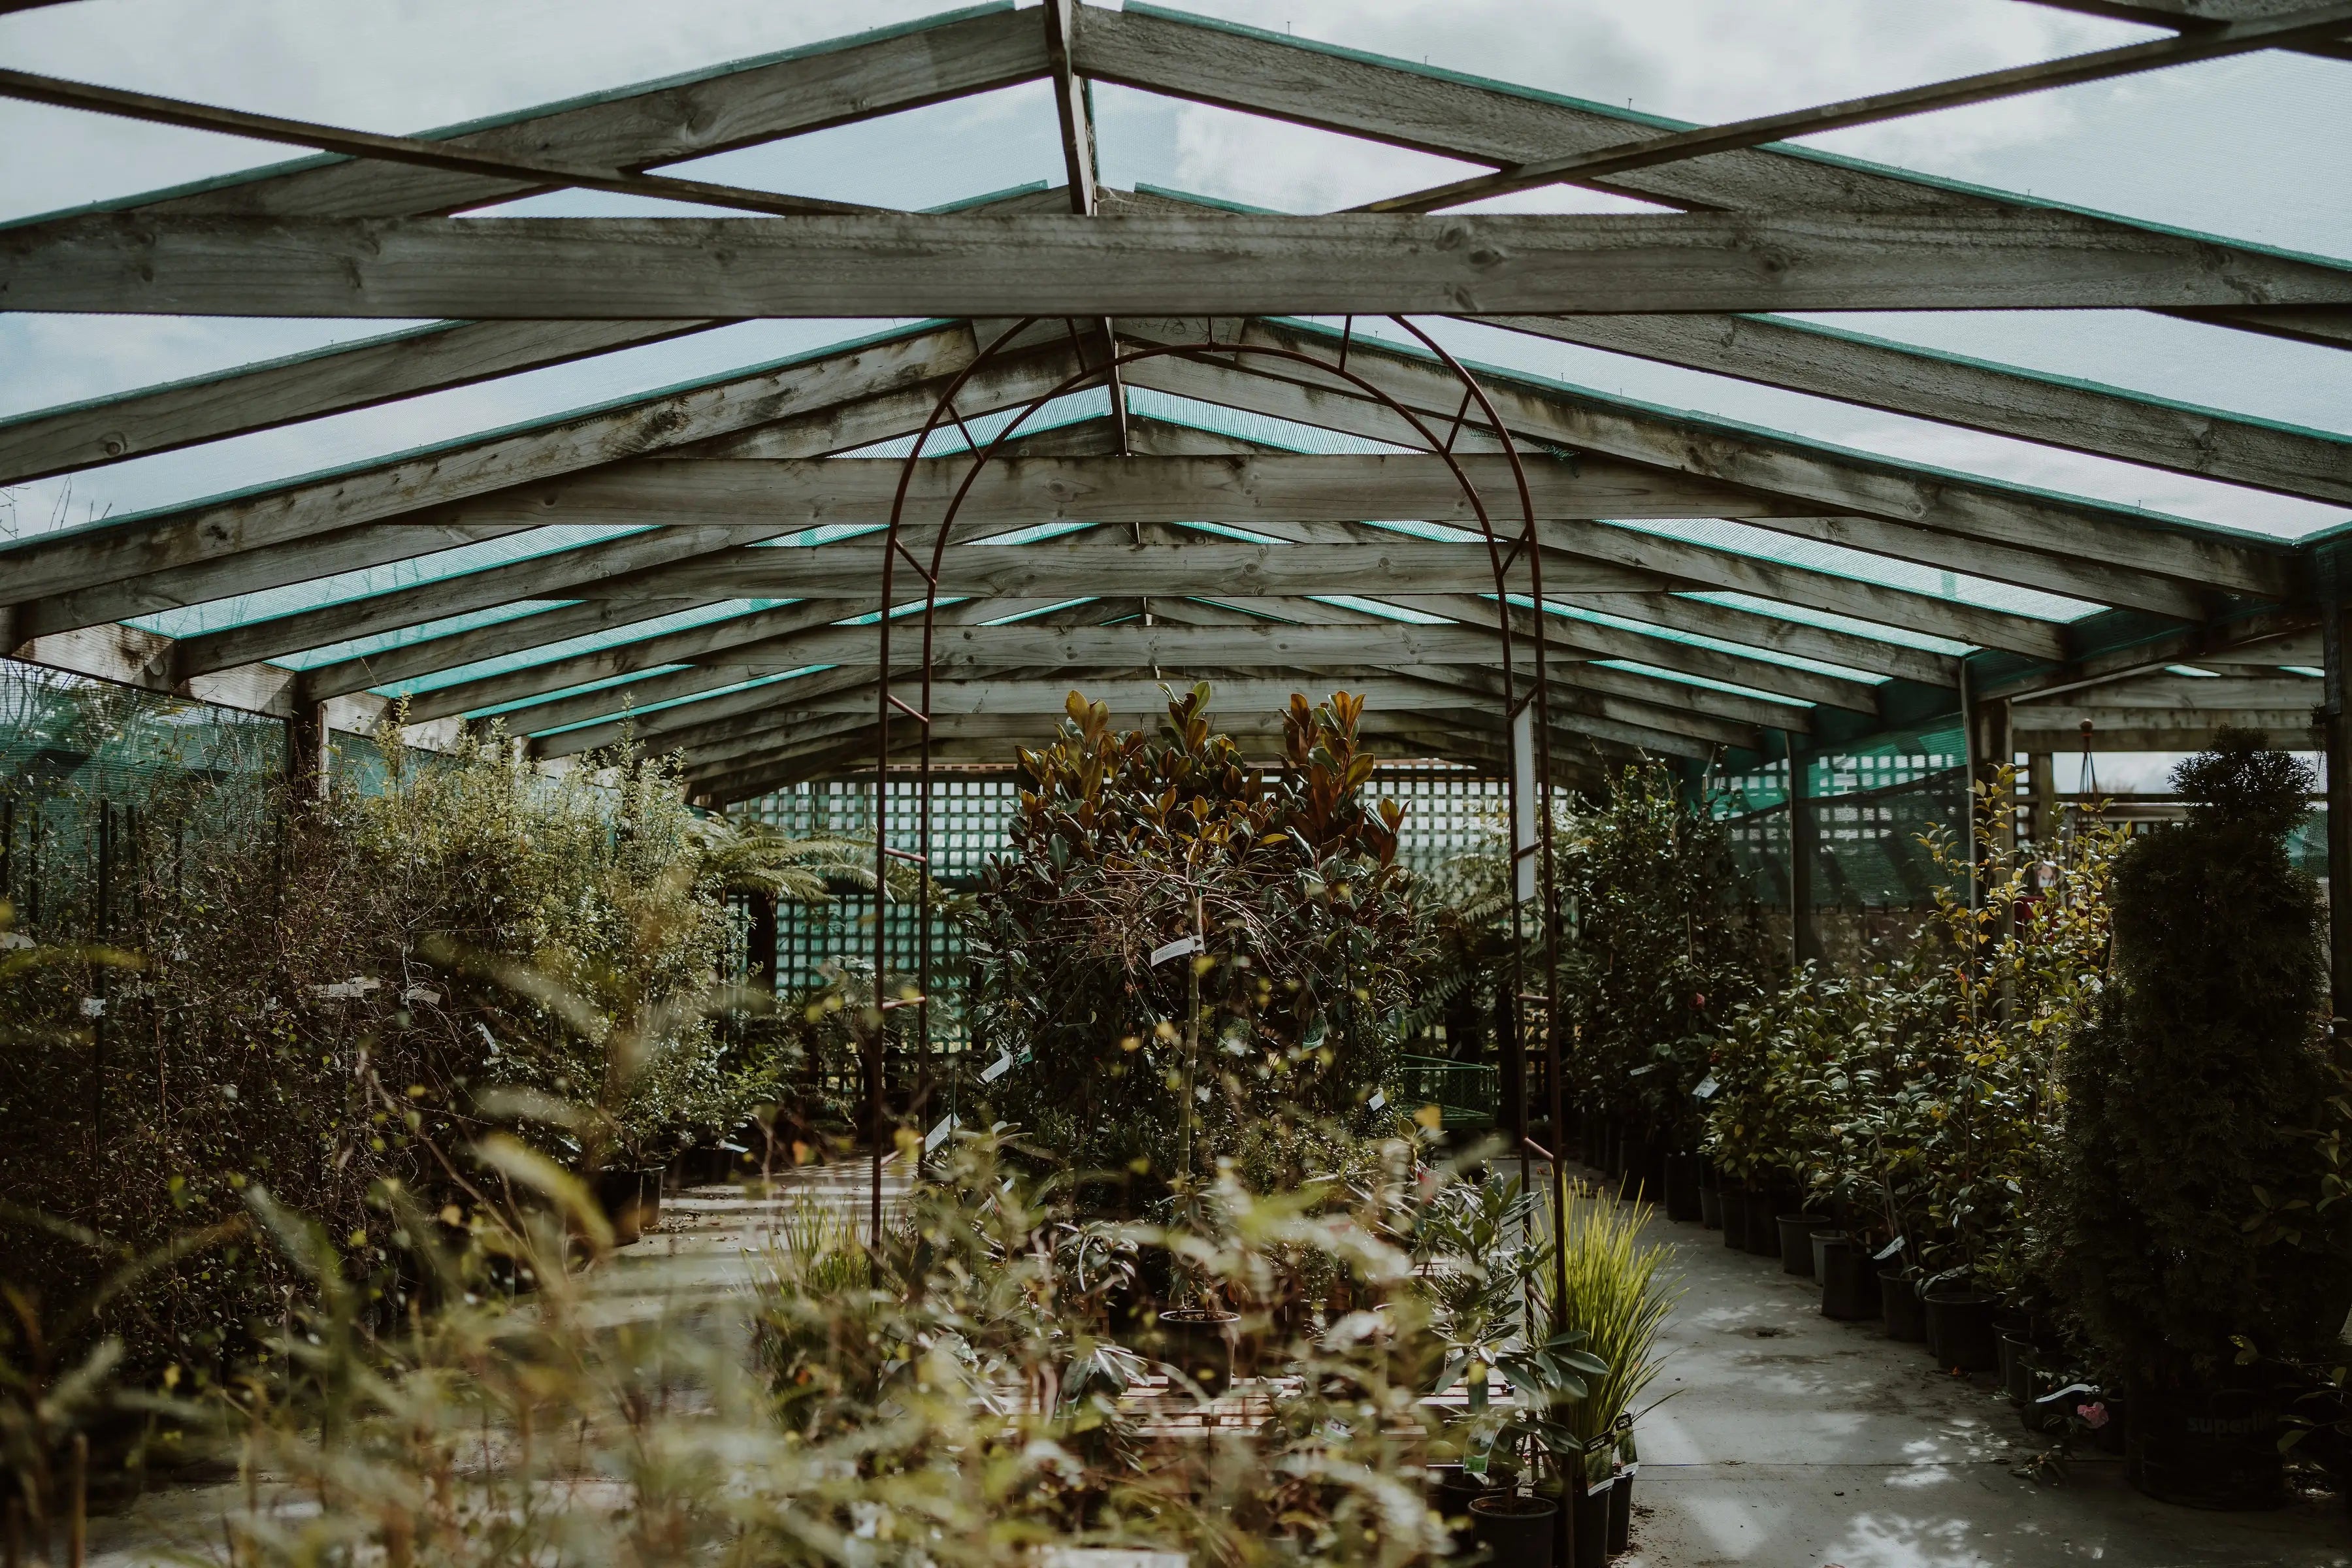 Gray Floral Nursery and Garden Centre in Blenheim, Marlborough, New Zealand